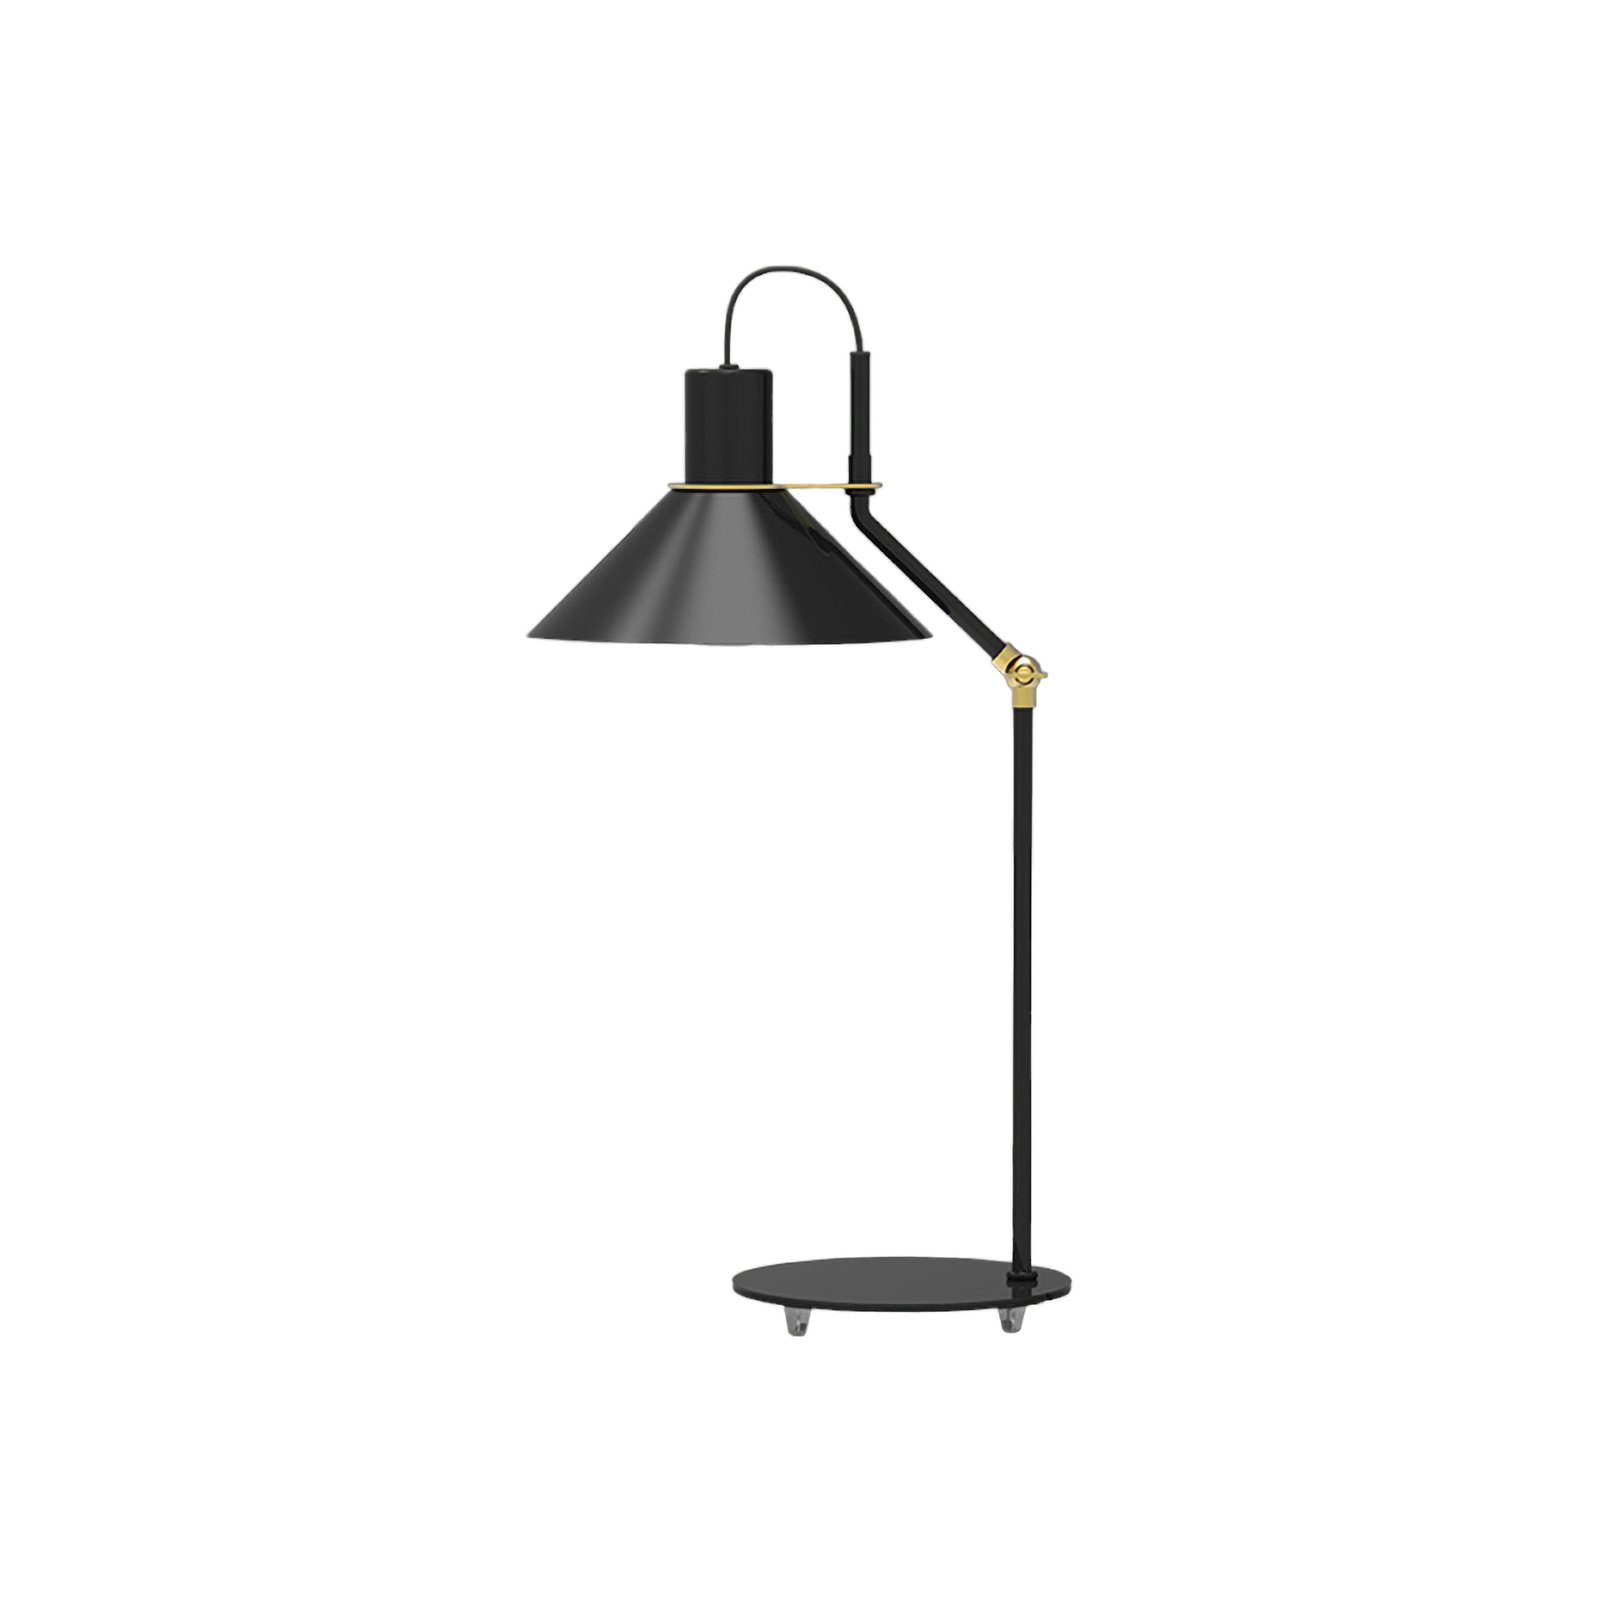 Aluminor Zinga bordslampa, svart, mässingsdetalj